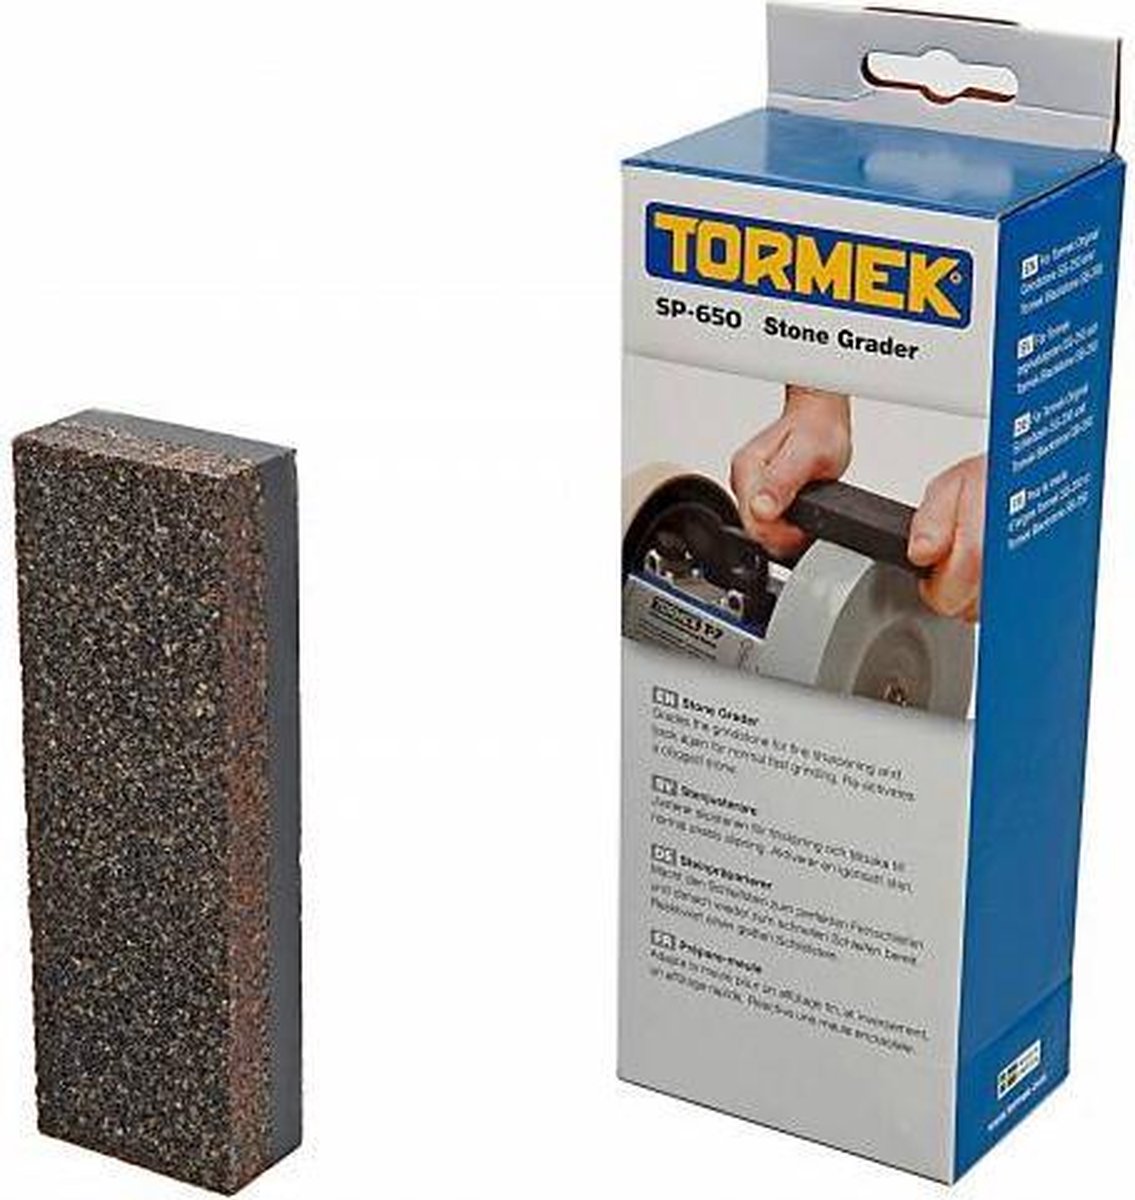 Tormek SP-650 Stone Grader Power Tool Services